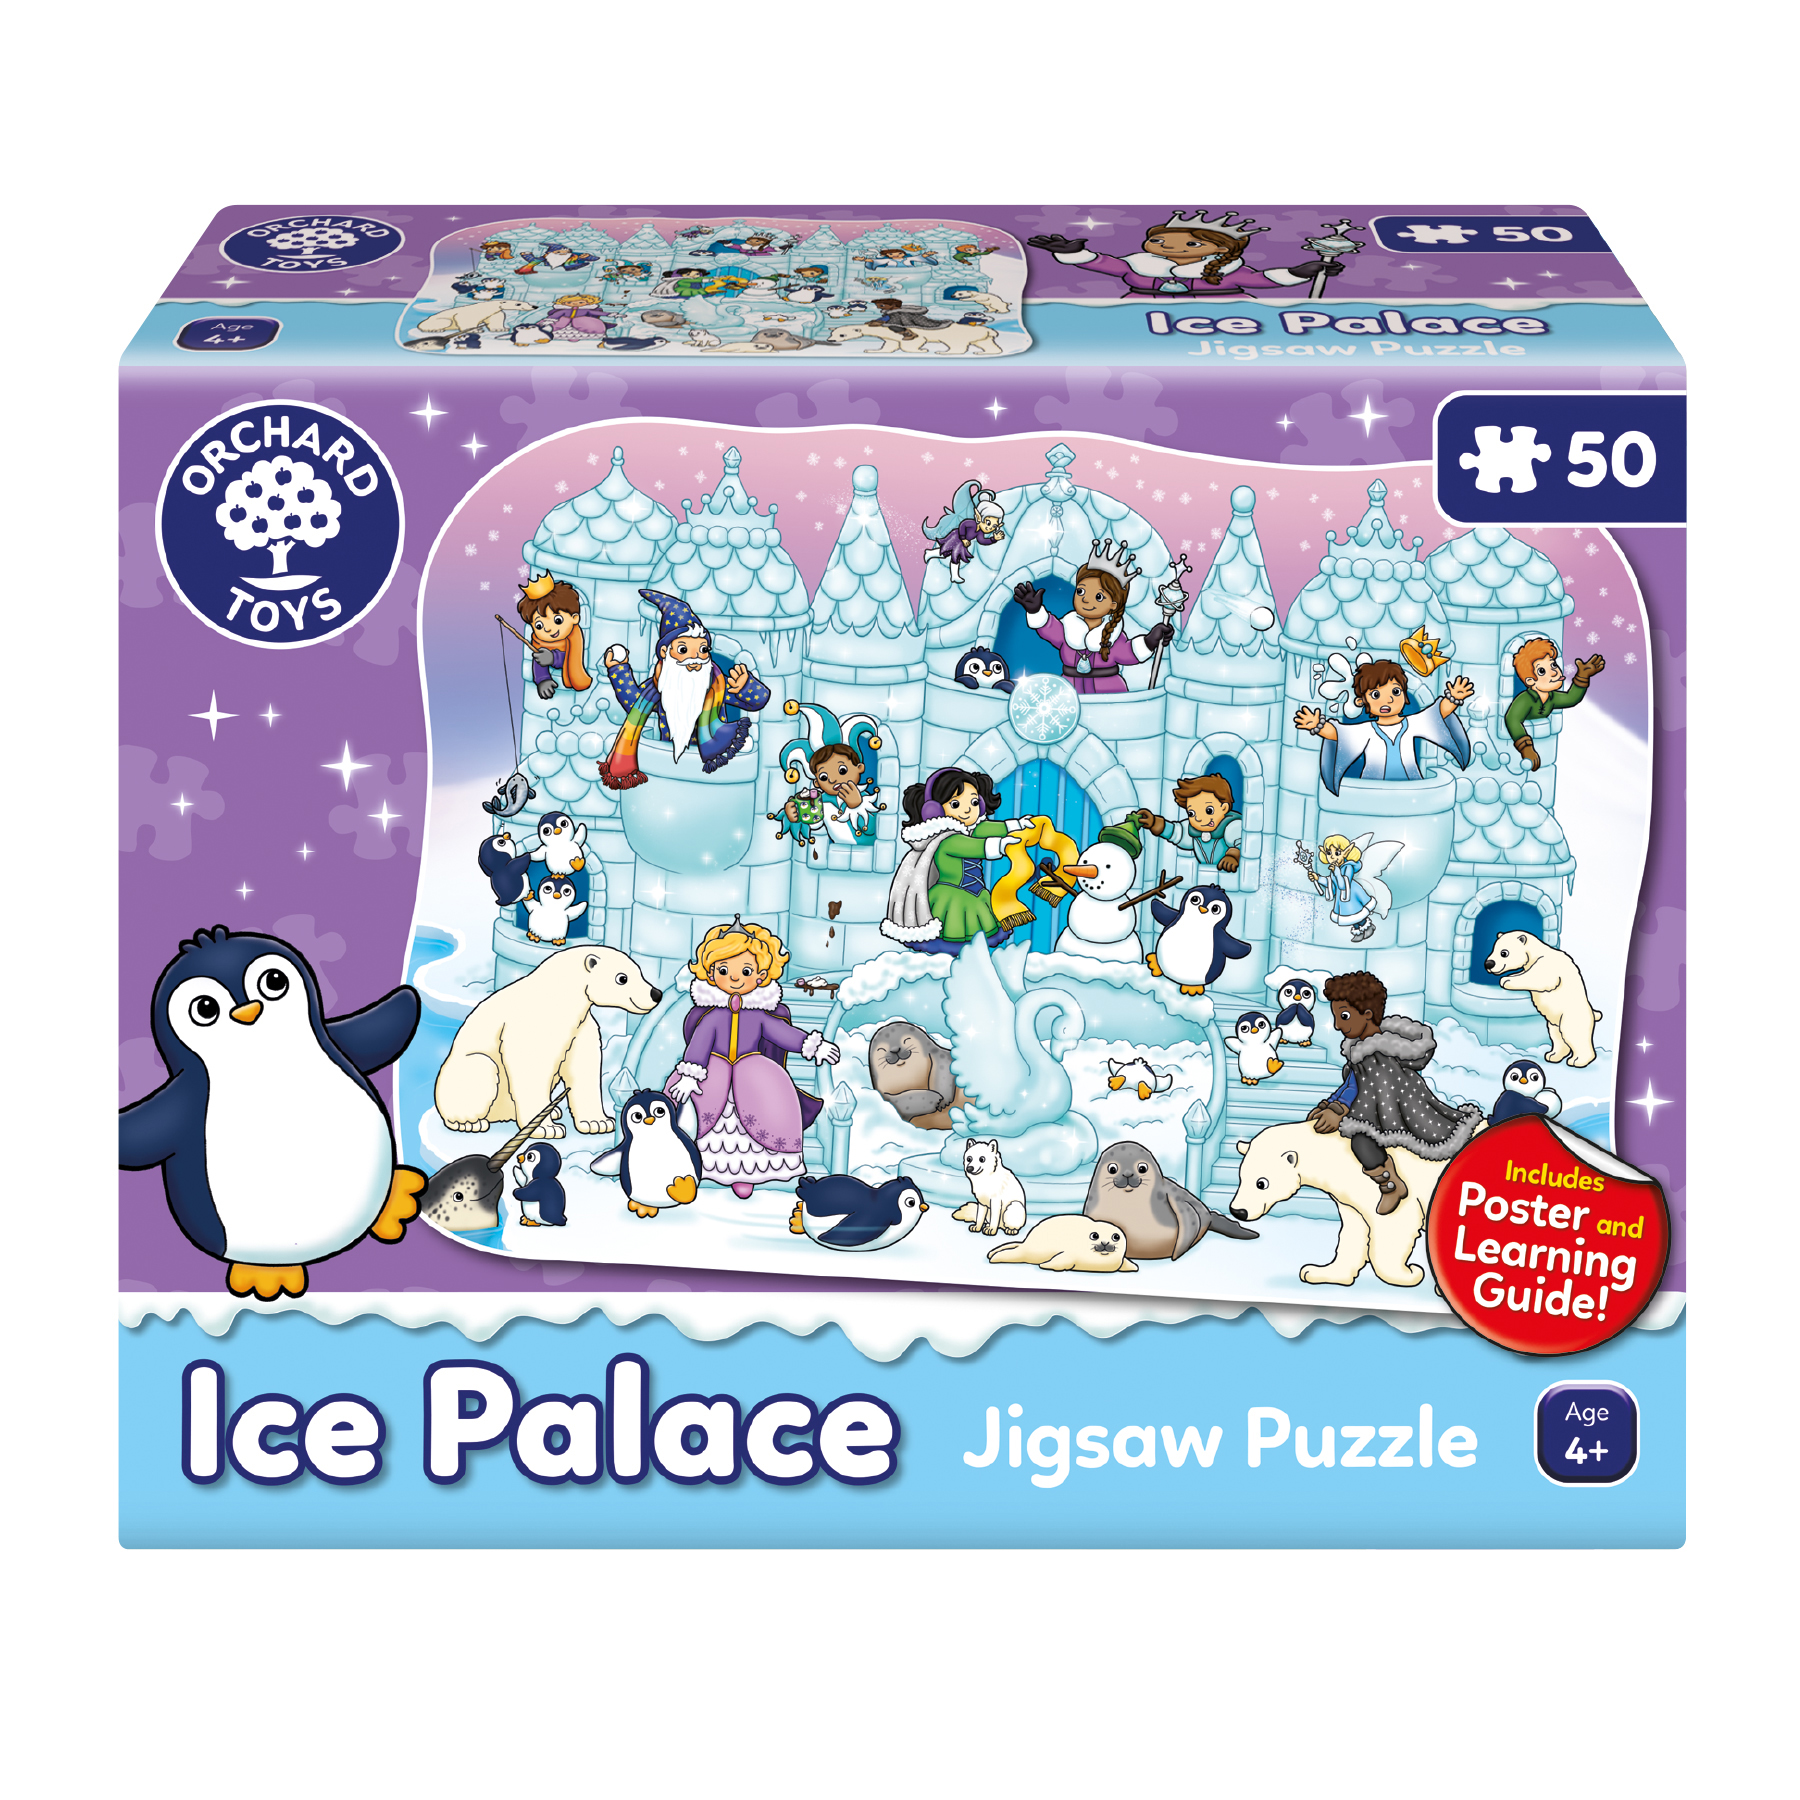 Ice Palace Jigsaw Puzzle, worth £11.25